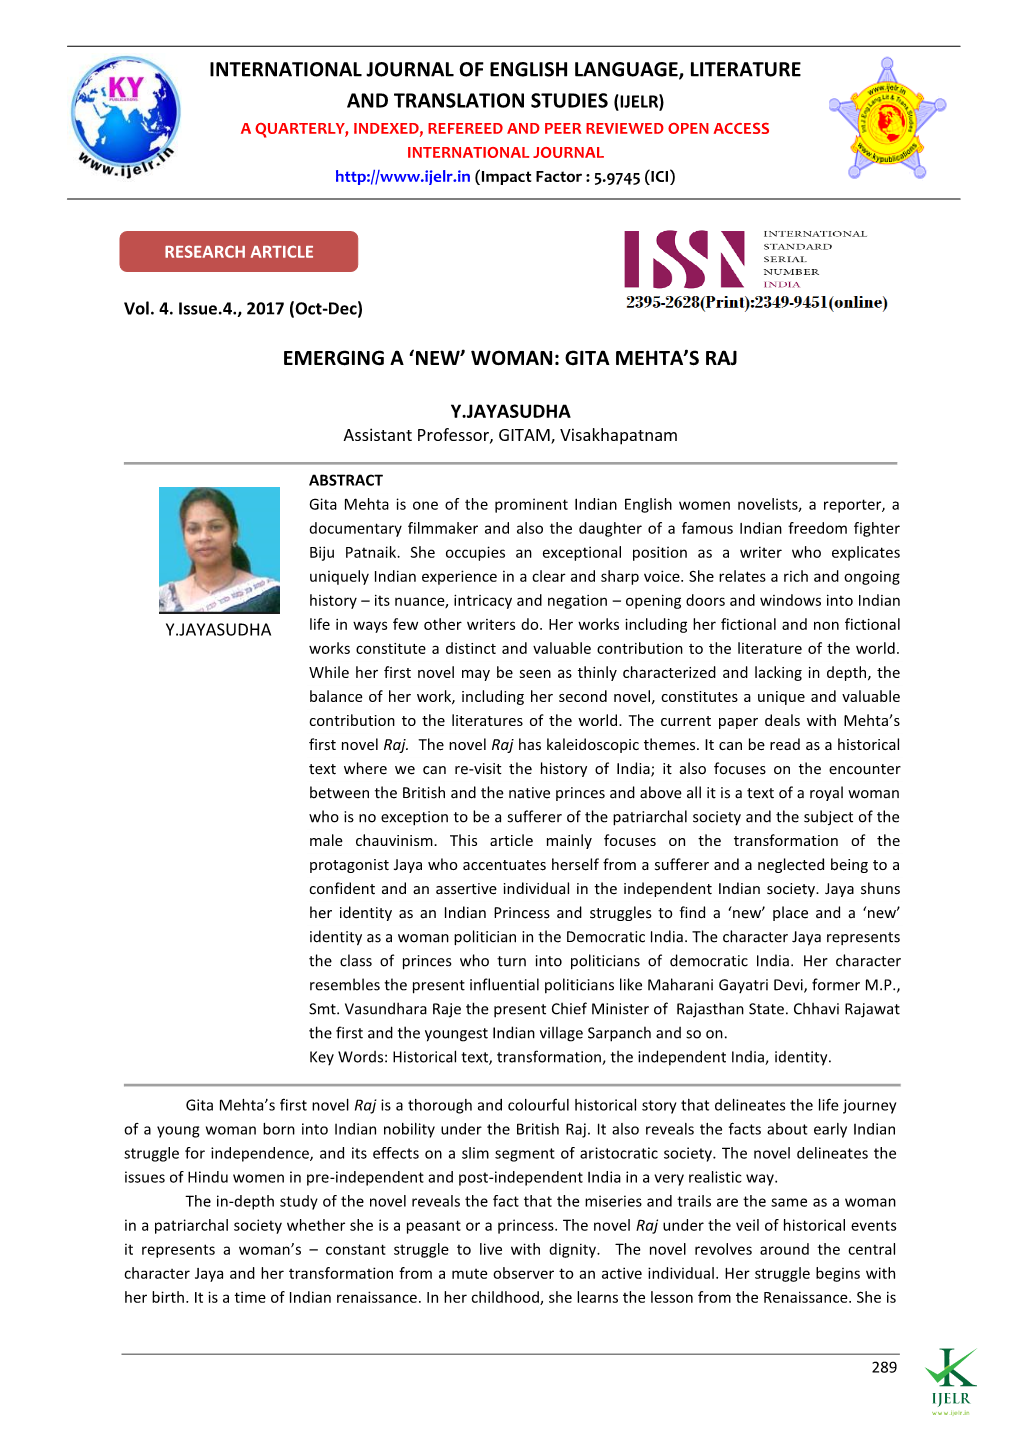 Emerging a 'New' Woman: Gita Mehta's Raj International Journal of English Language, Literature and Translation Studies